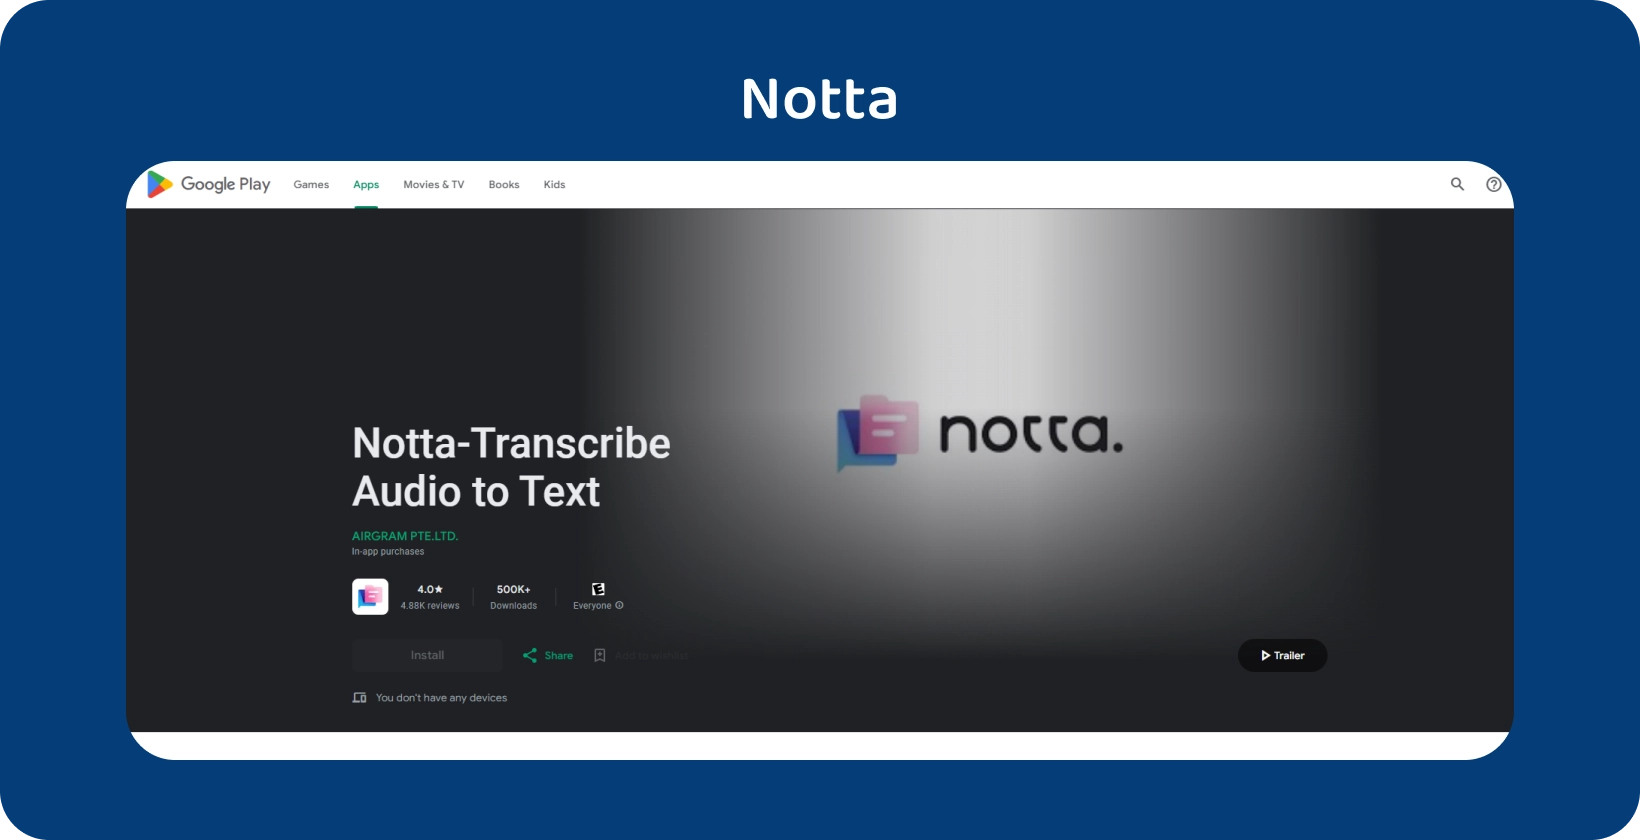 Aplikasi Notta.ai di Google Play, menampilkan kemampuannya untuk menyalin audio ke teks secara akurat di Android.